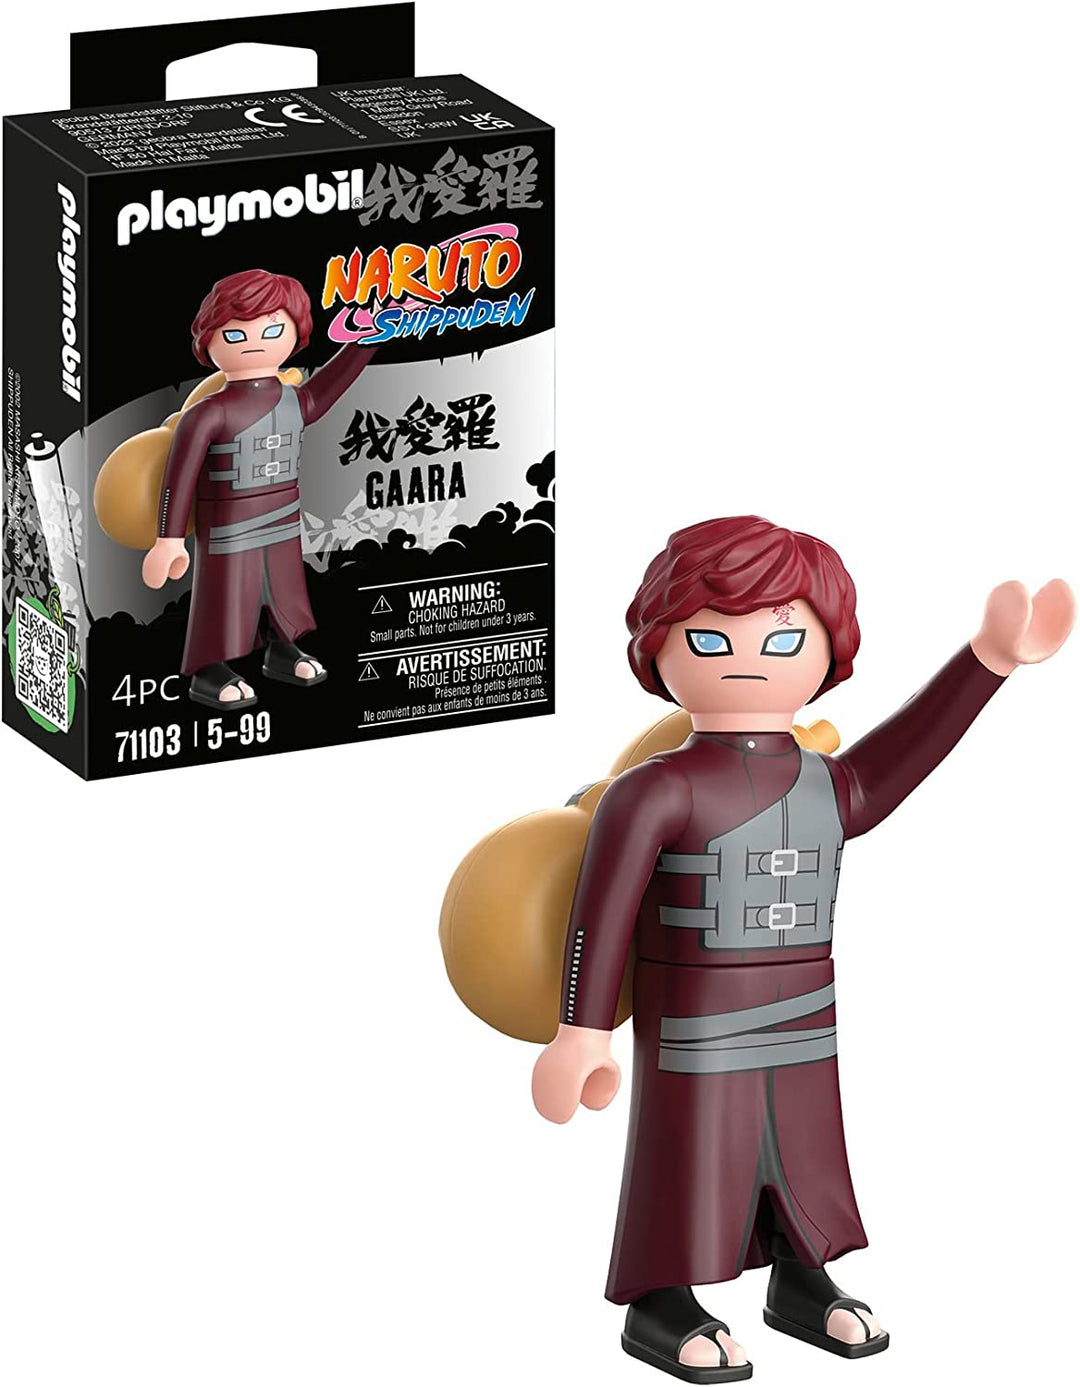 Playmobil 71103 Naruto: Gaara Figurenset